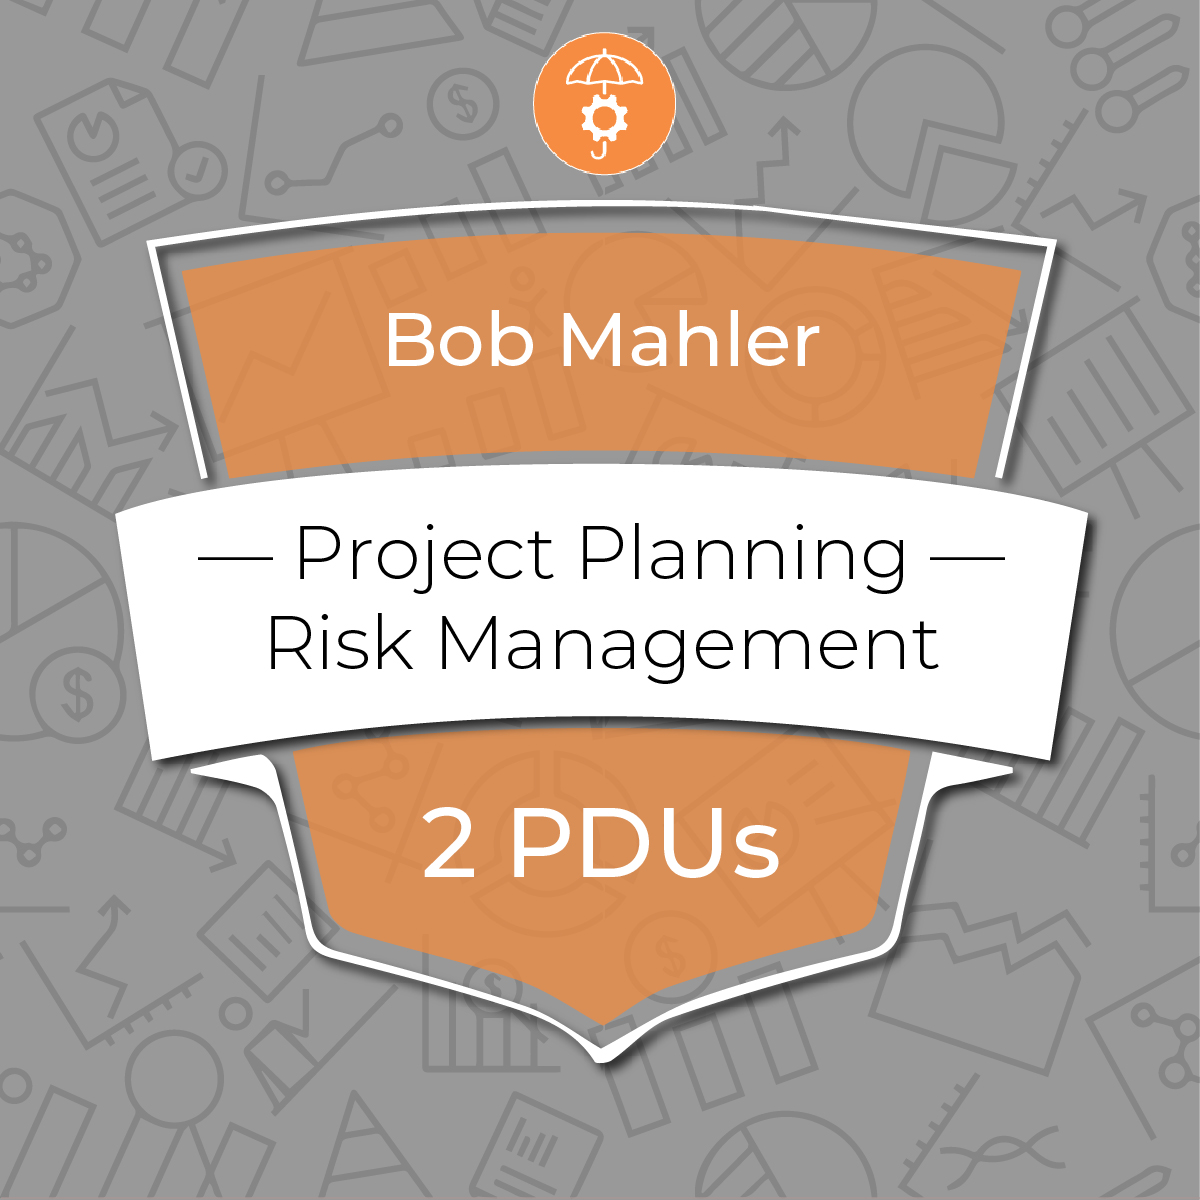 Project Planning - Risk Management